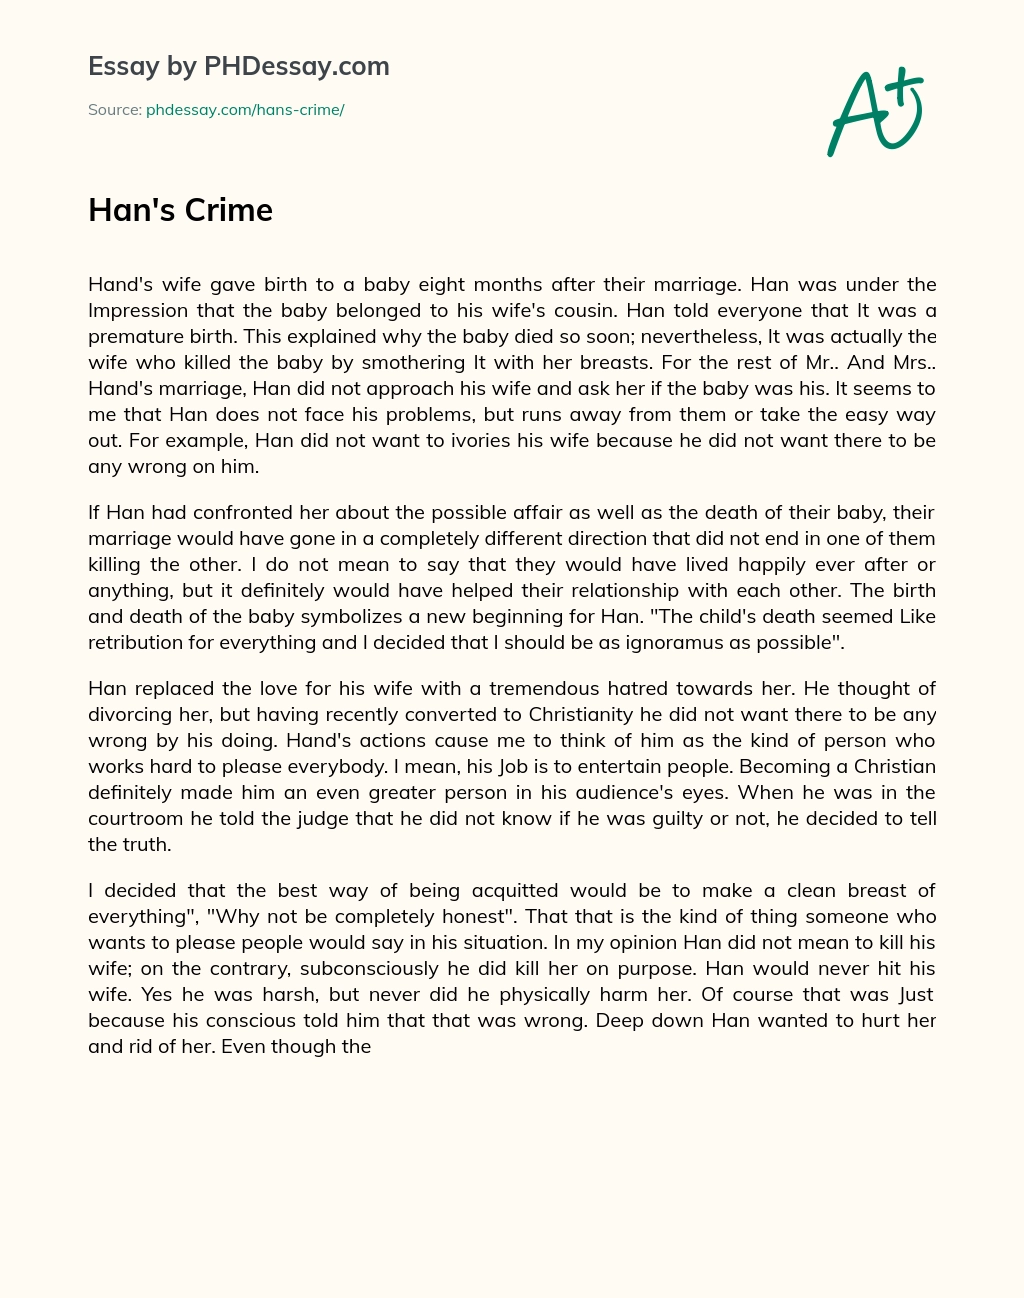 Han’s Crime essay